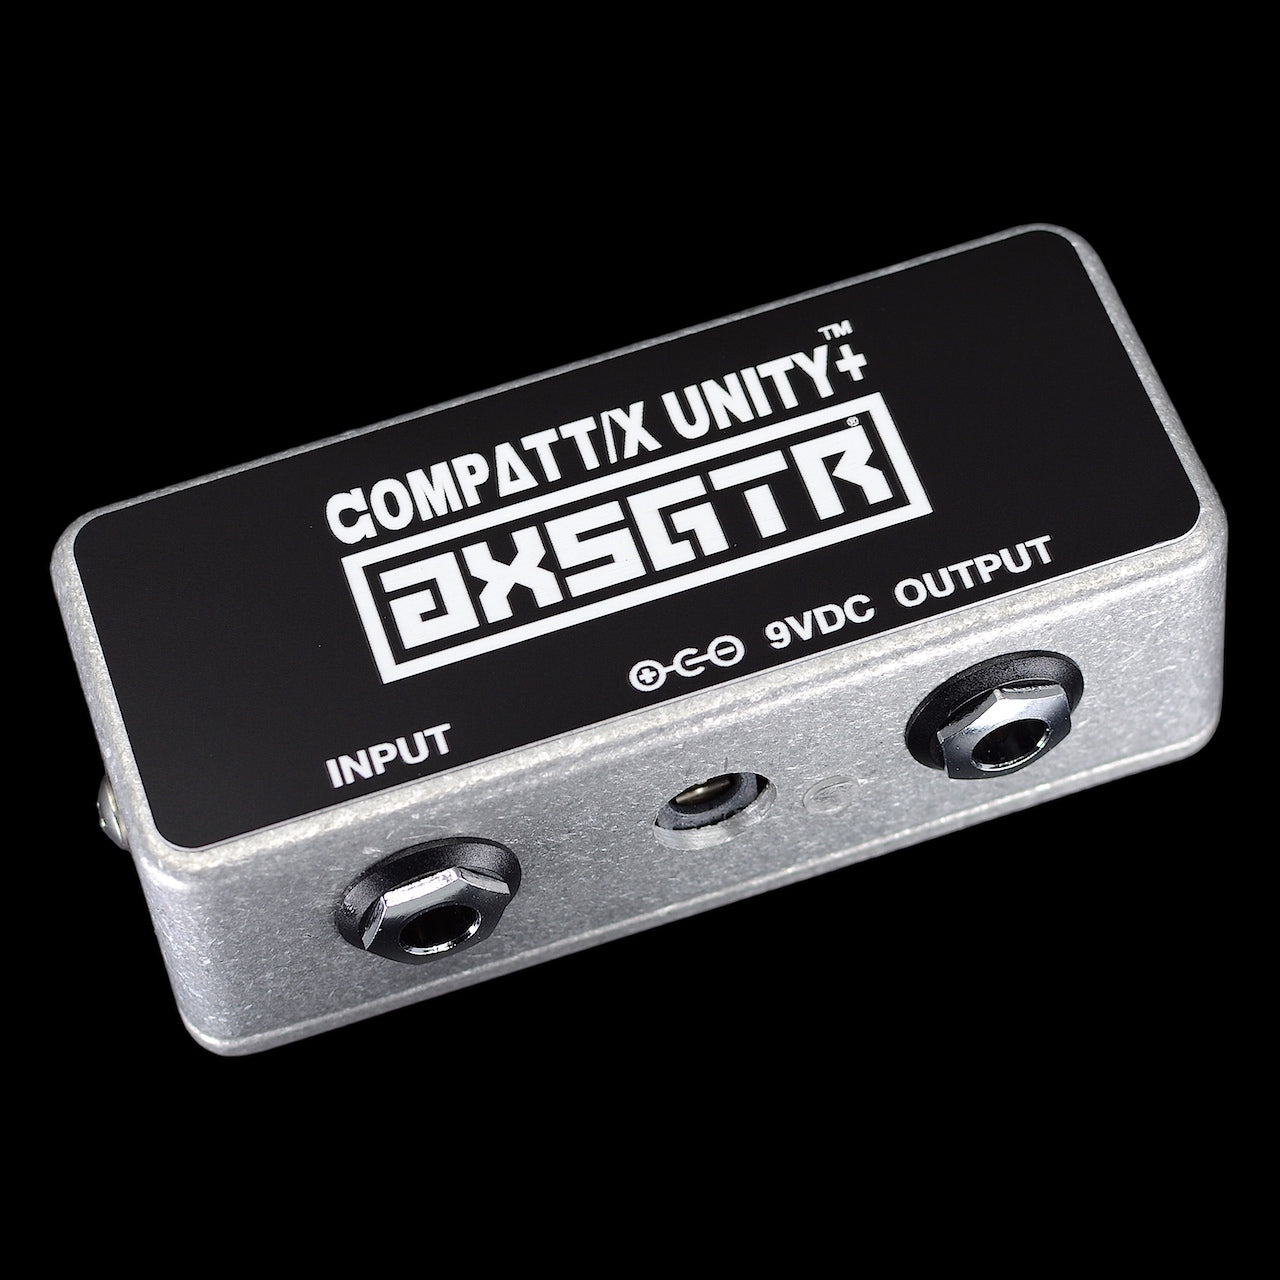 axsgtr axess electronics compattx unity plus guitar input buffer output line driver balanced long line audio transmitter unity gain amplifier